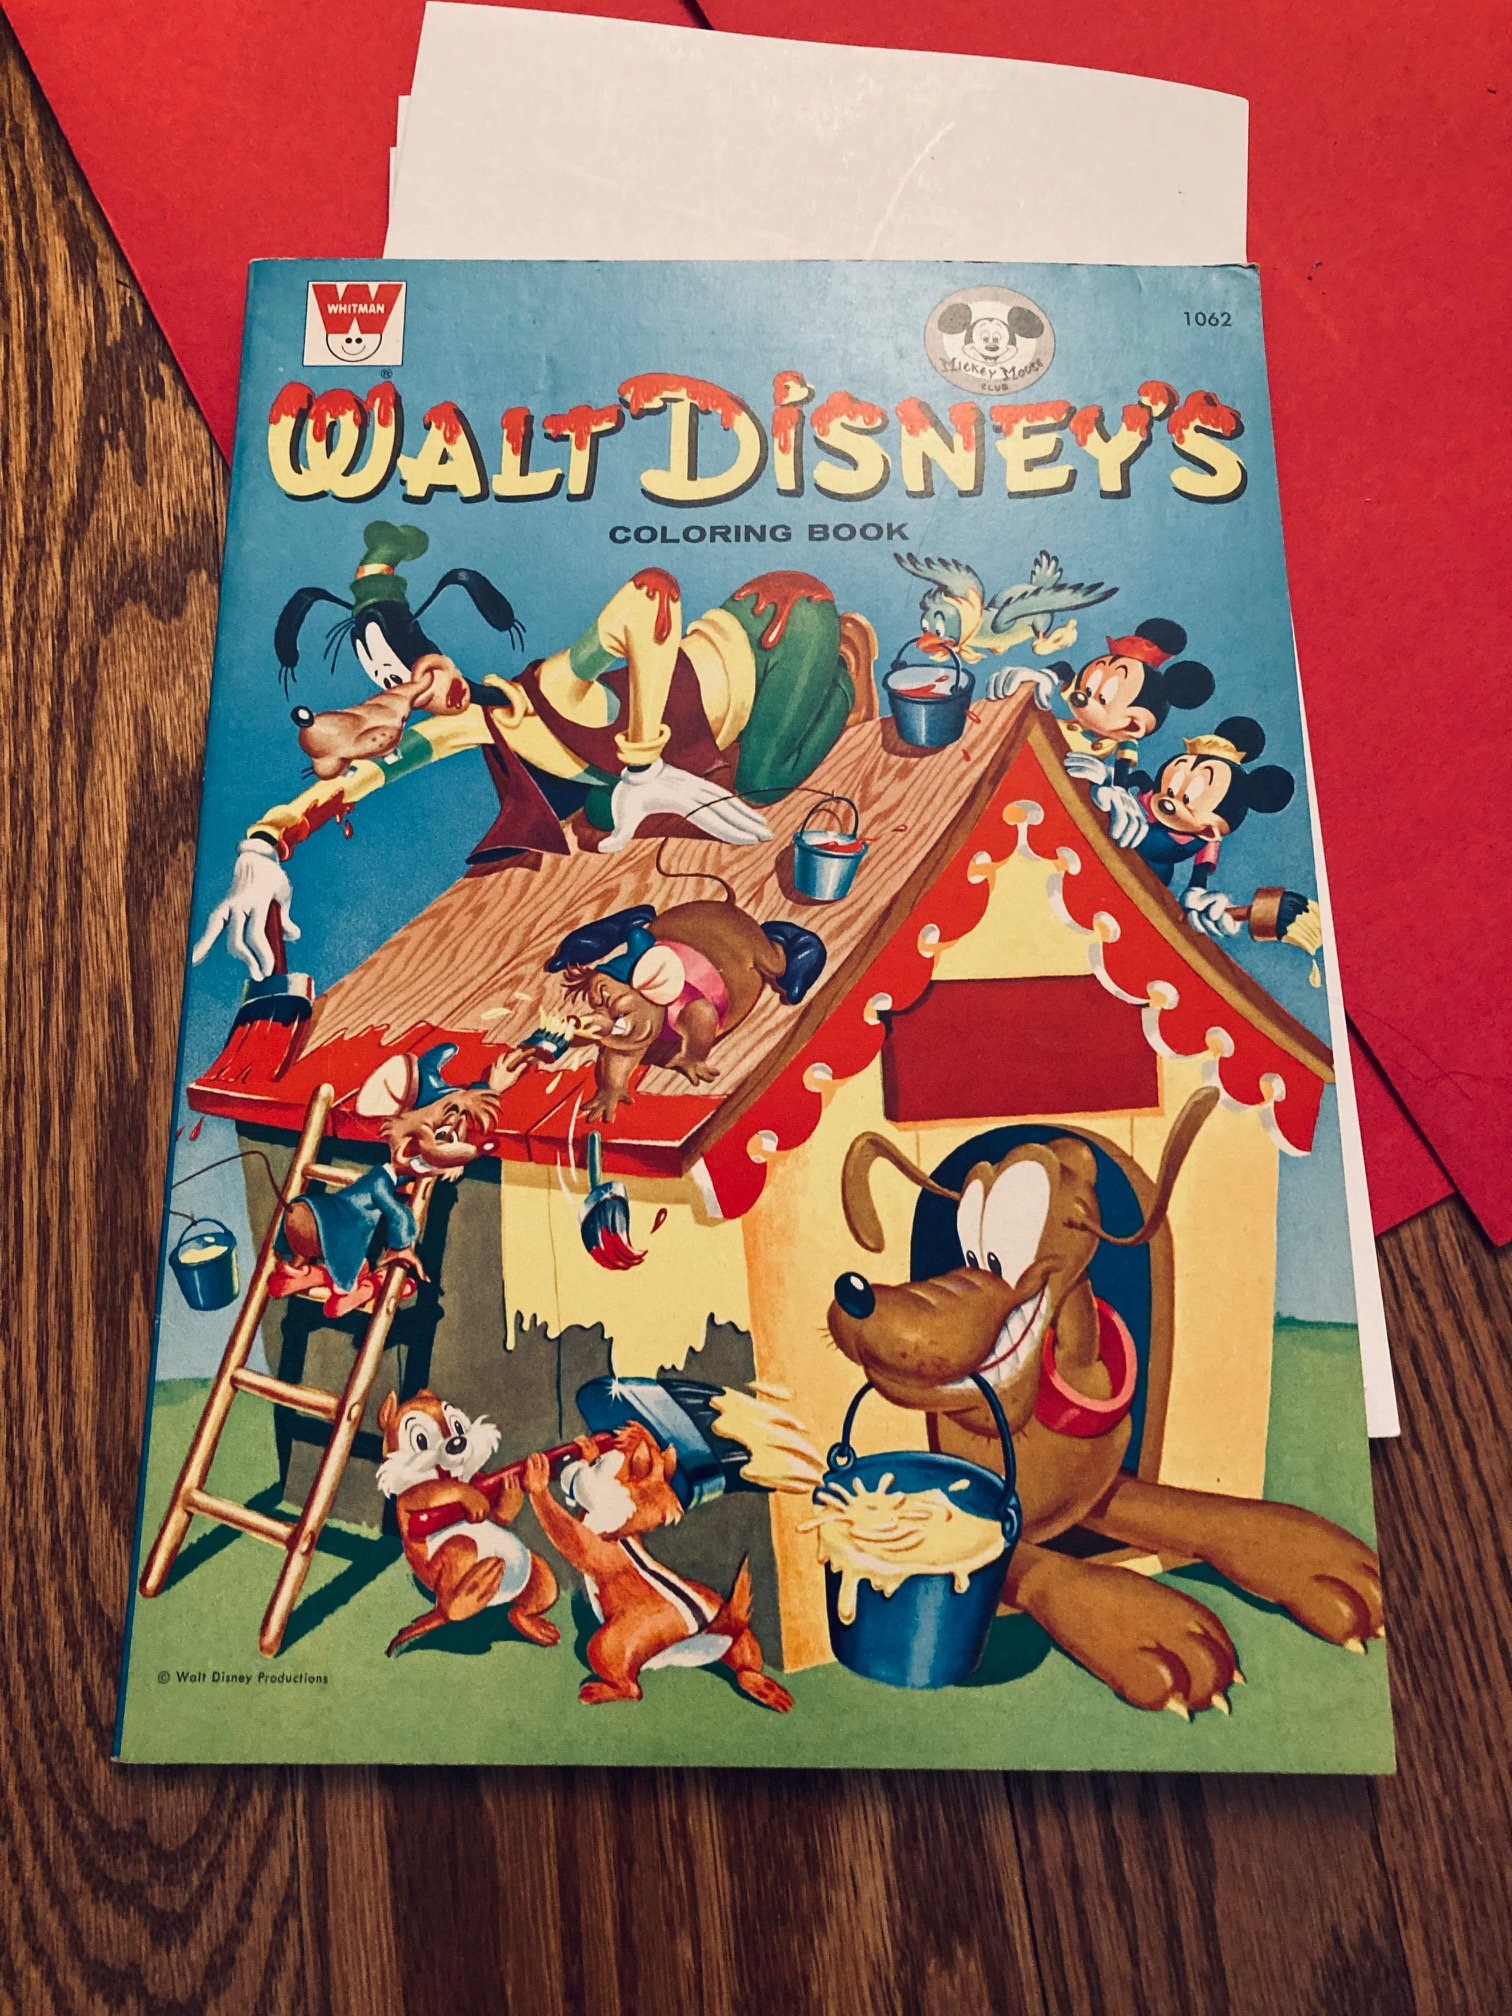 WALT DISNEYs PAINT BOOK, Whitman Books 1944, Vintage Disneyana, colori –  NEET STUFF